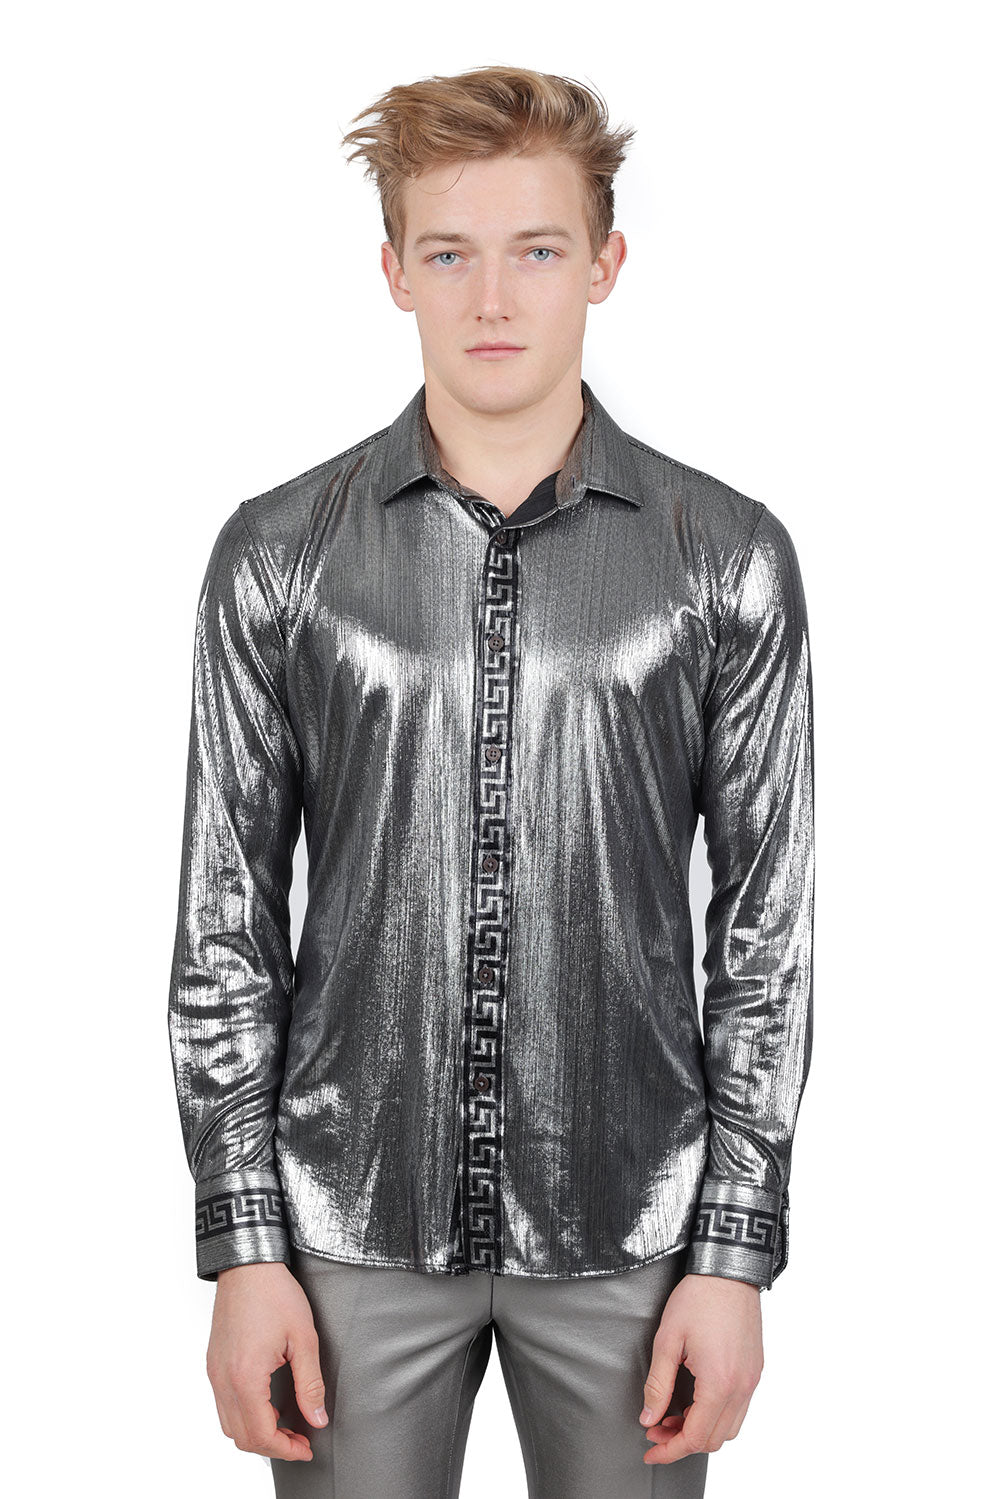 BARABAS Men's Greek Key Print Long Sleeve Button Up Shiny shirts B314 Silver Black